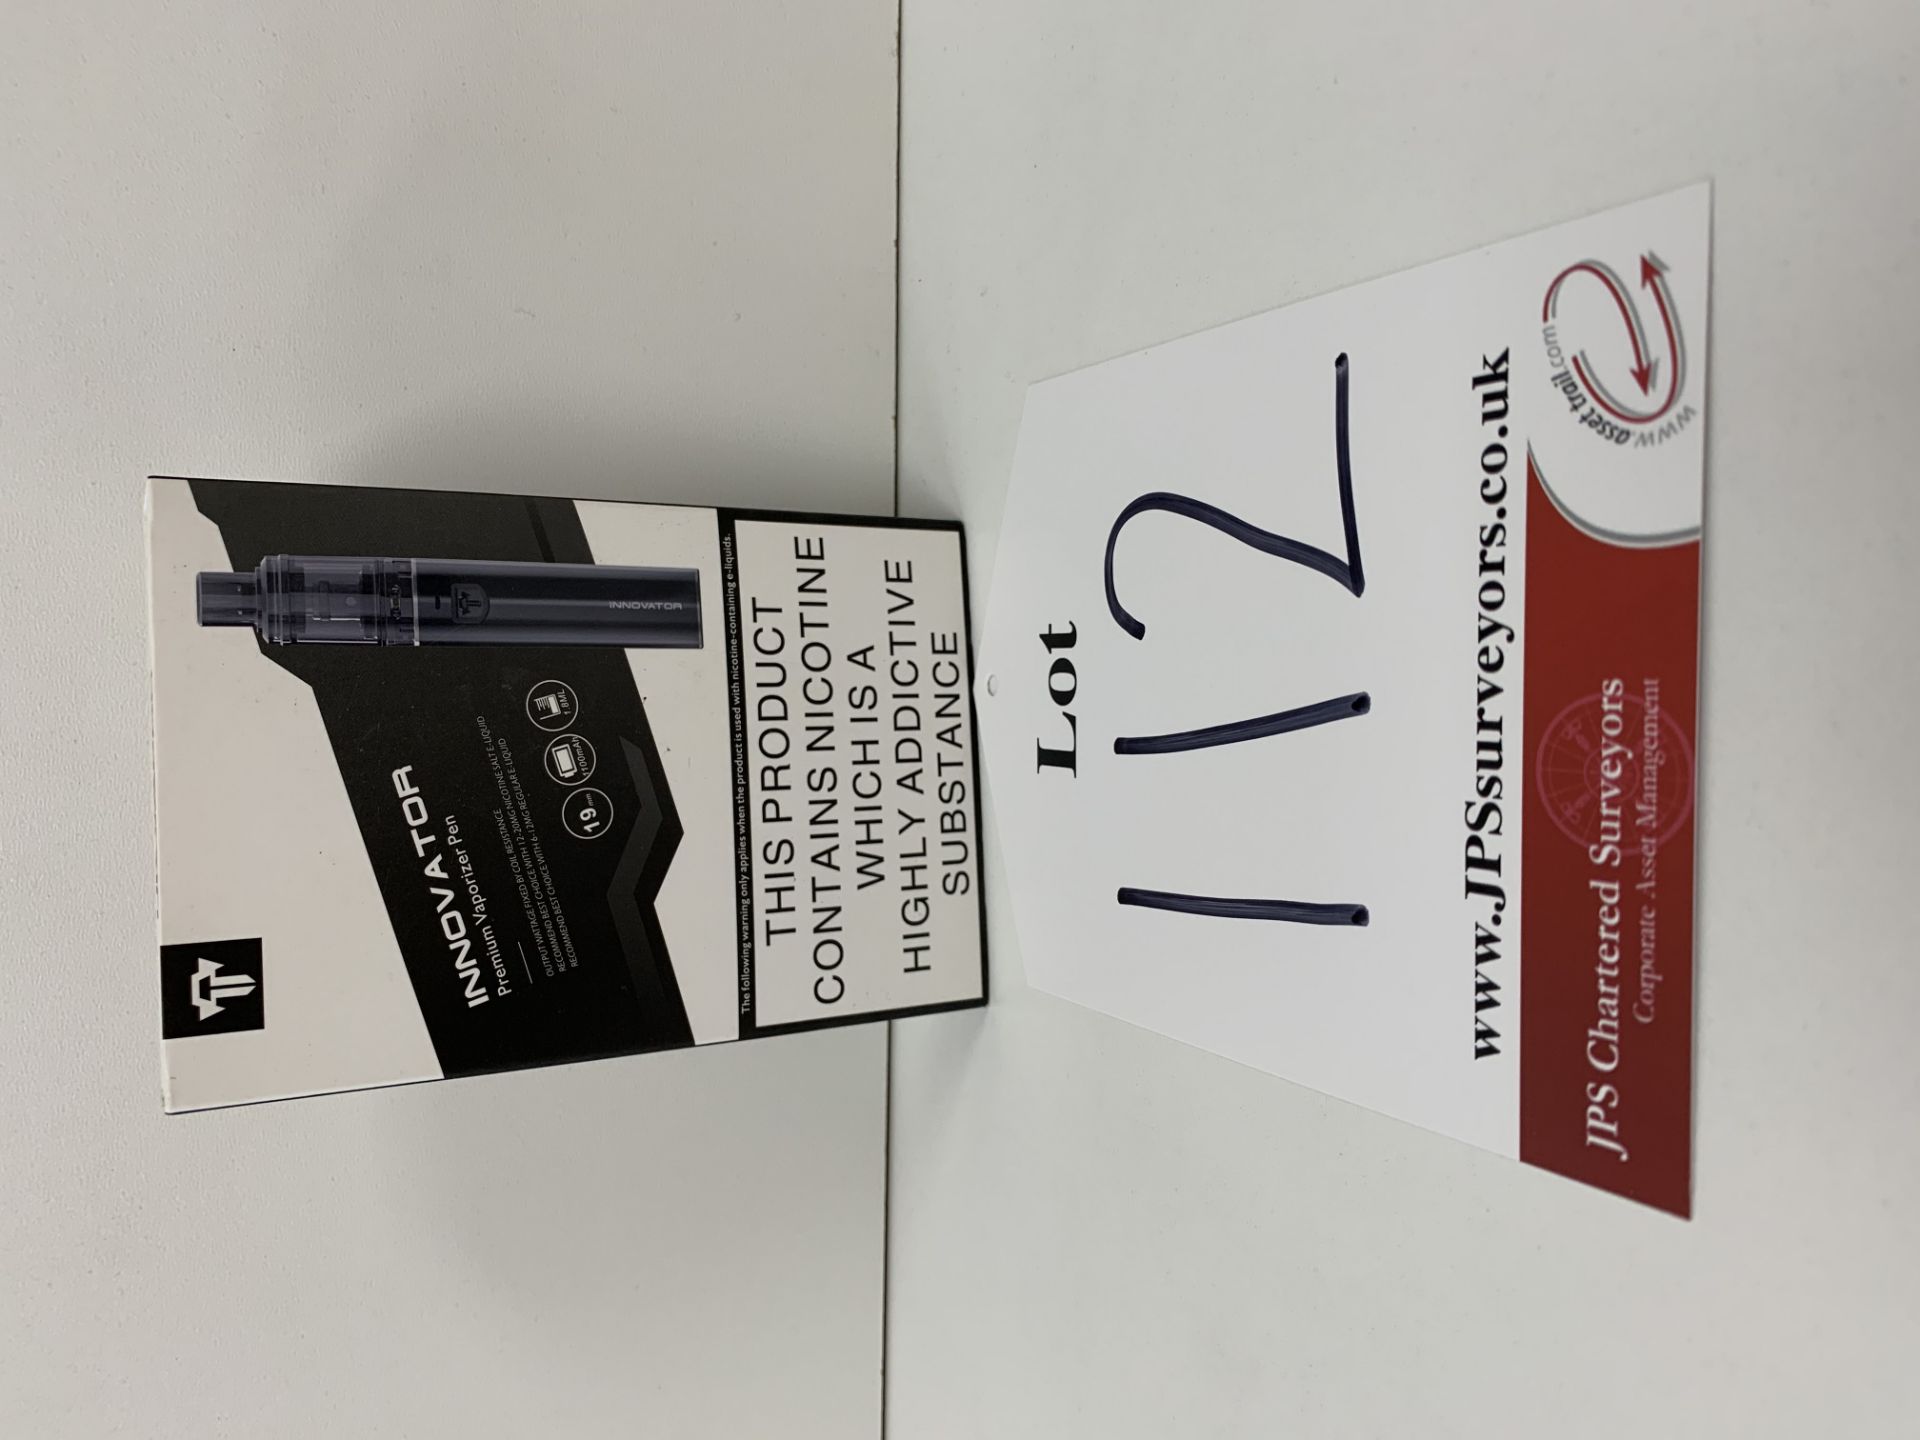 1 x BNIB- seal broken UK Vapor Warehouse Black Innovator Premium Vaporizer Pen |6970879594570